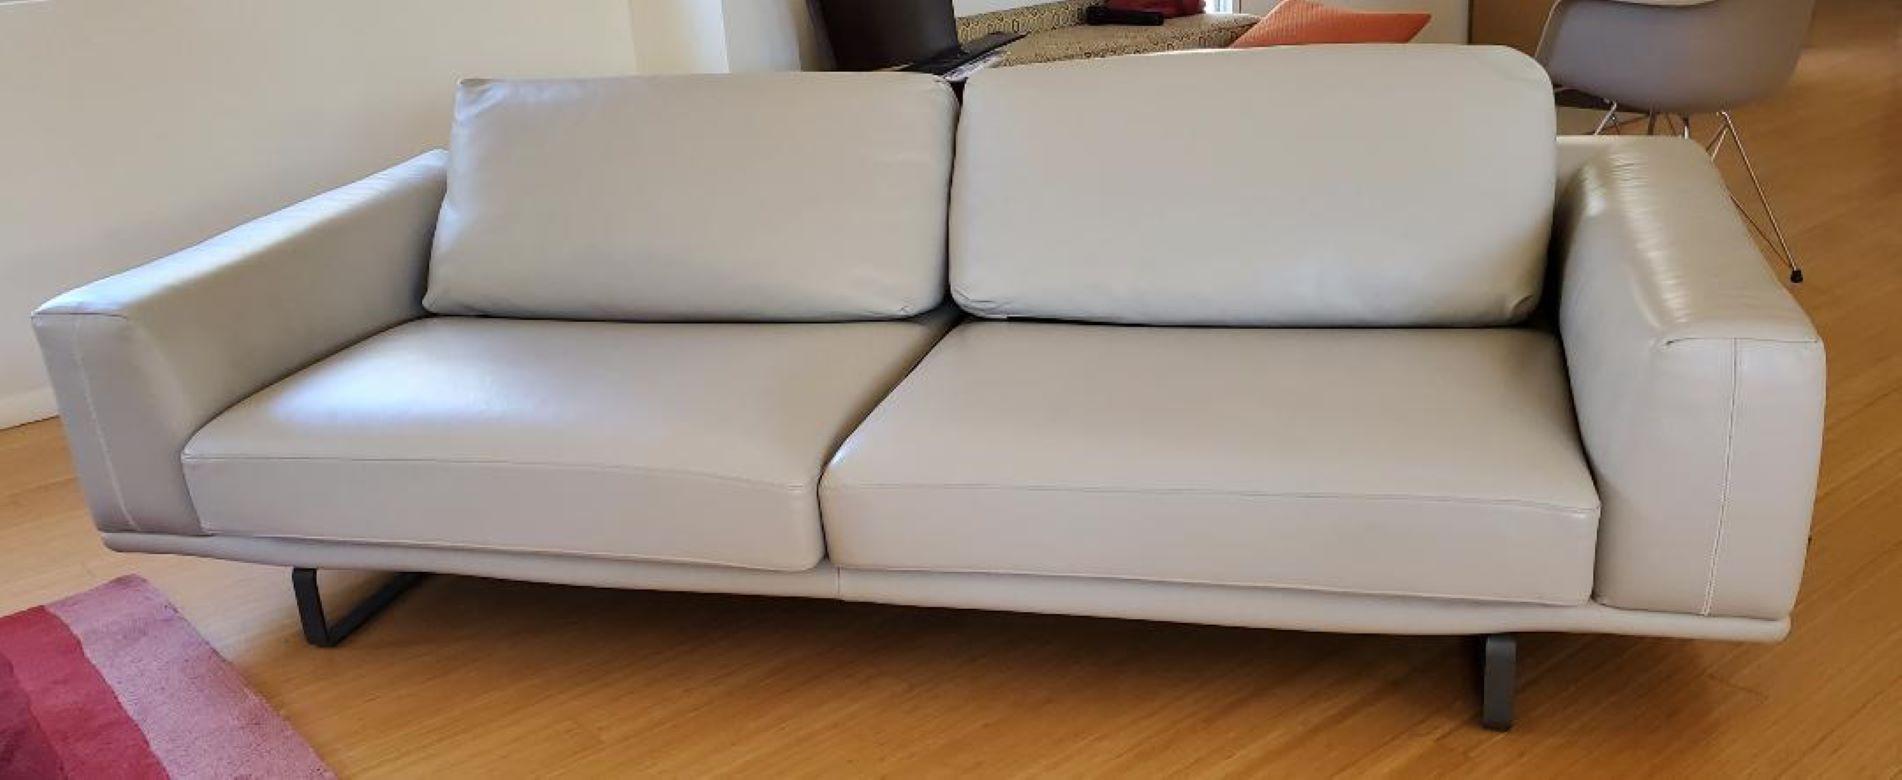 Natuzzi Italia Leather Sofa by Maurizio Manzoni and Roberto Tapinassi For Sale 1